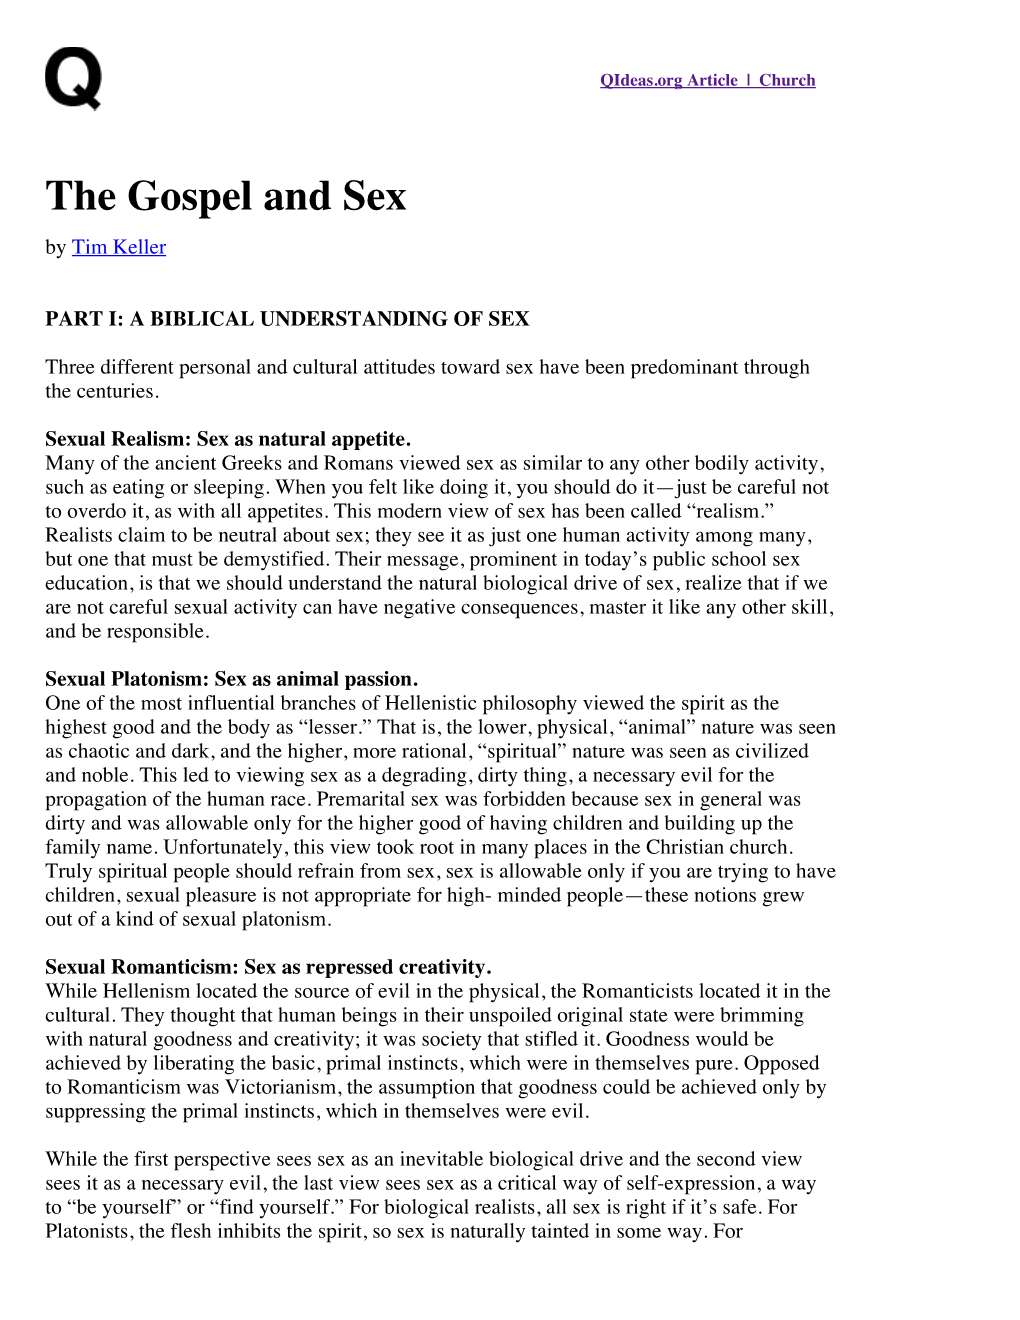 The Gospel and Sex by Tim Keller